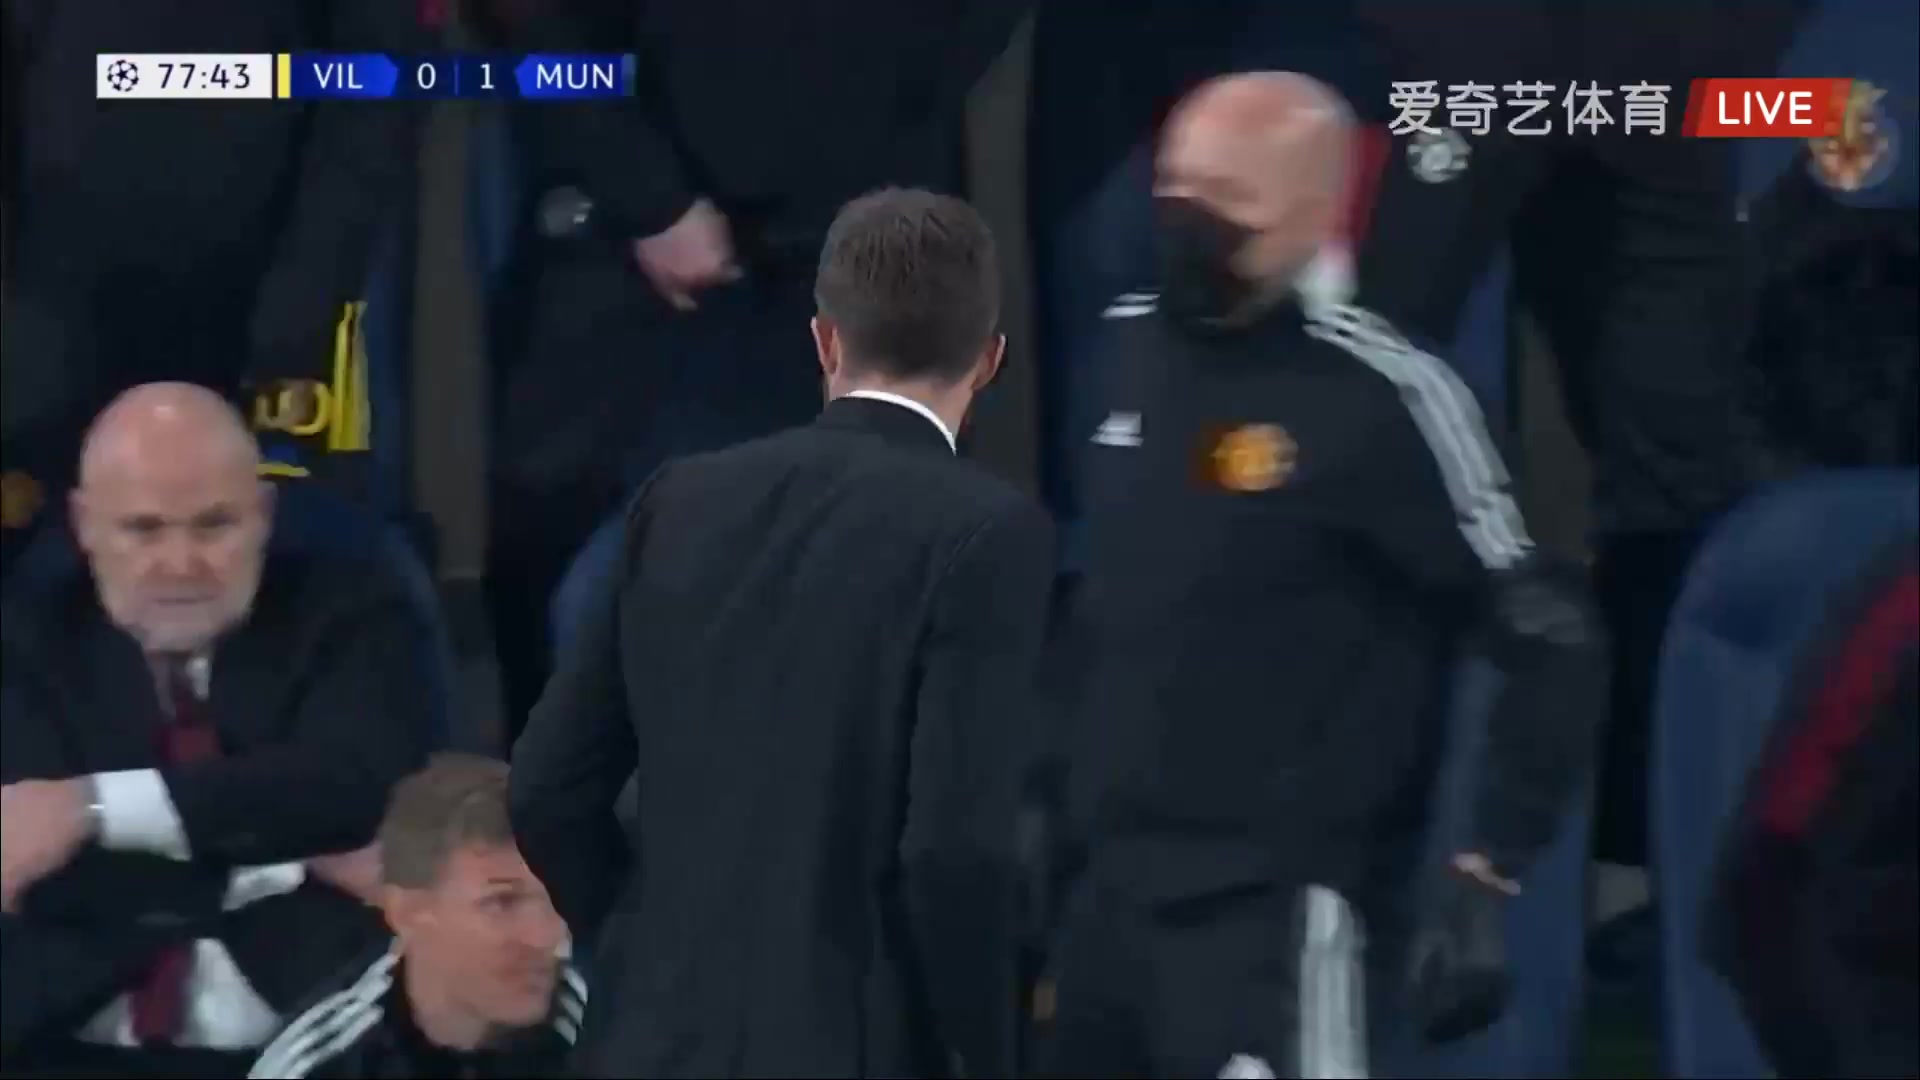 UEFA CL Villarreal Vs Manchester United Cristiano Ronaldo dos Santos Aveiro Goal in 77 min, Score 0:1